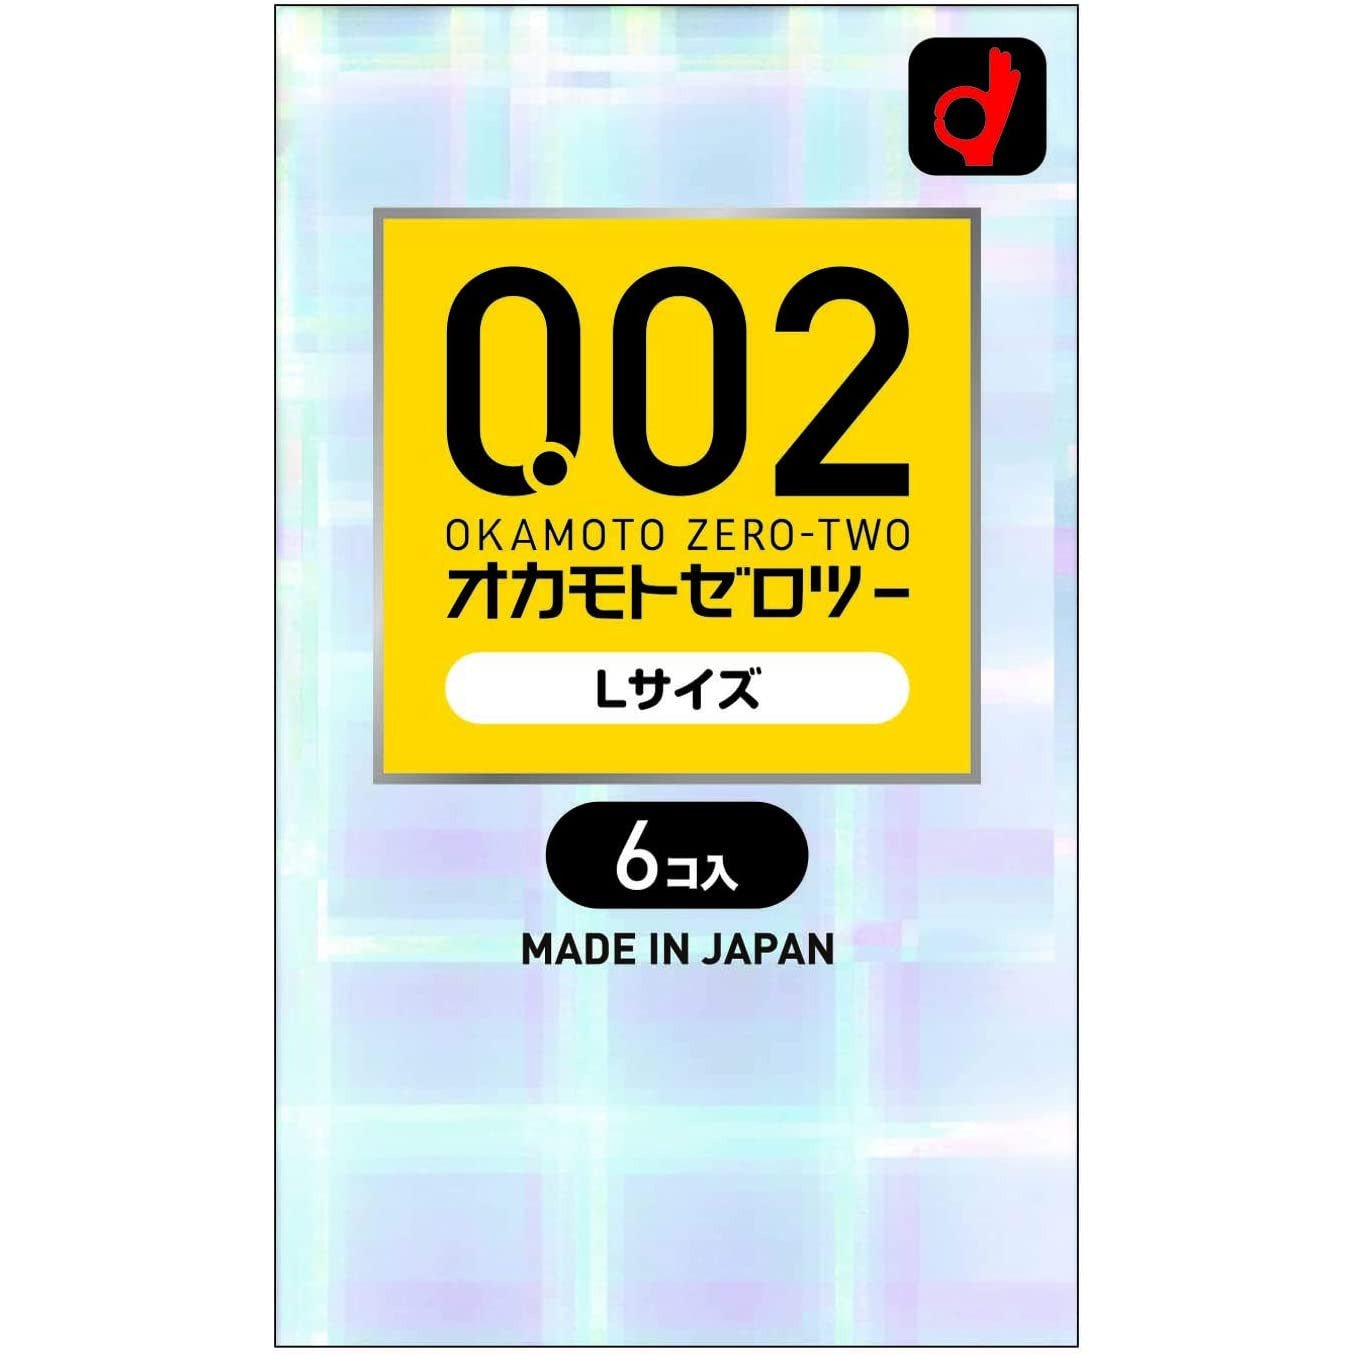 OKAMOTO岡本 002超薄避孕套 L號 6個入 - CosmeBear小熊日本藥妝For台灣